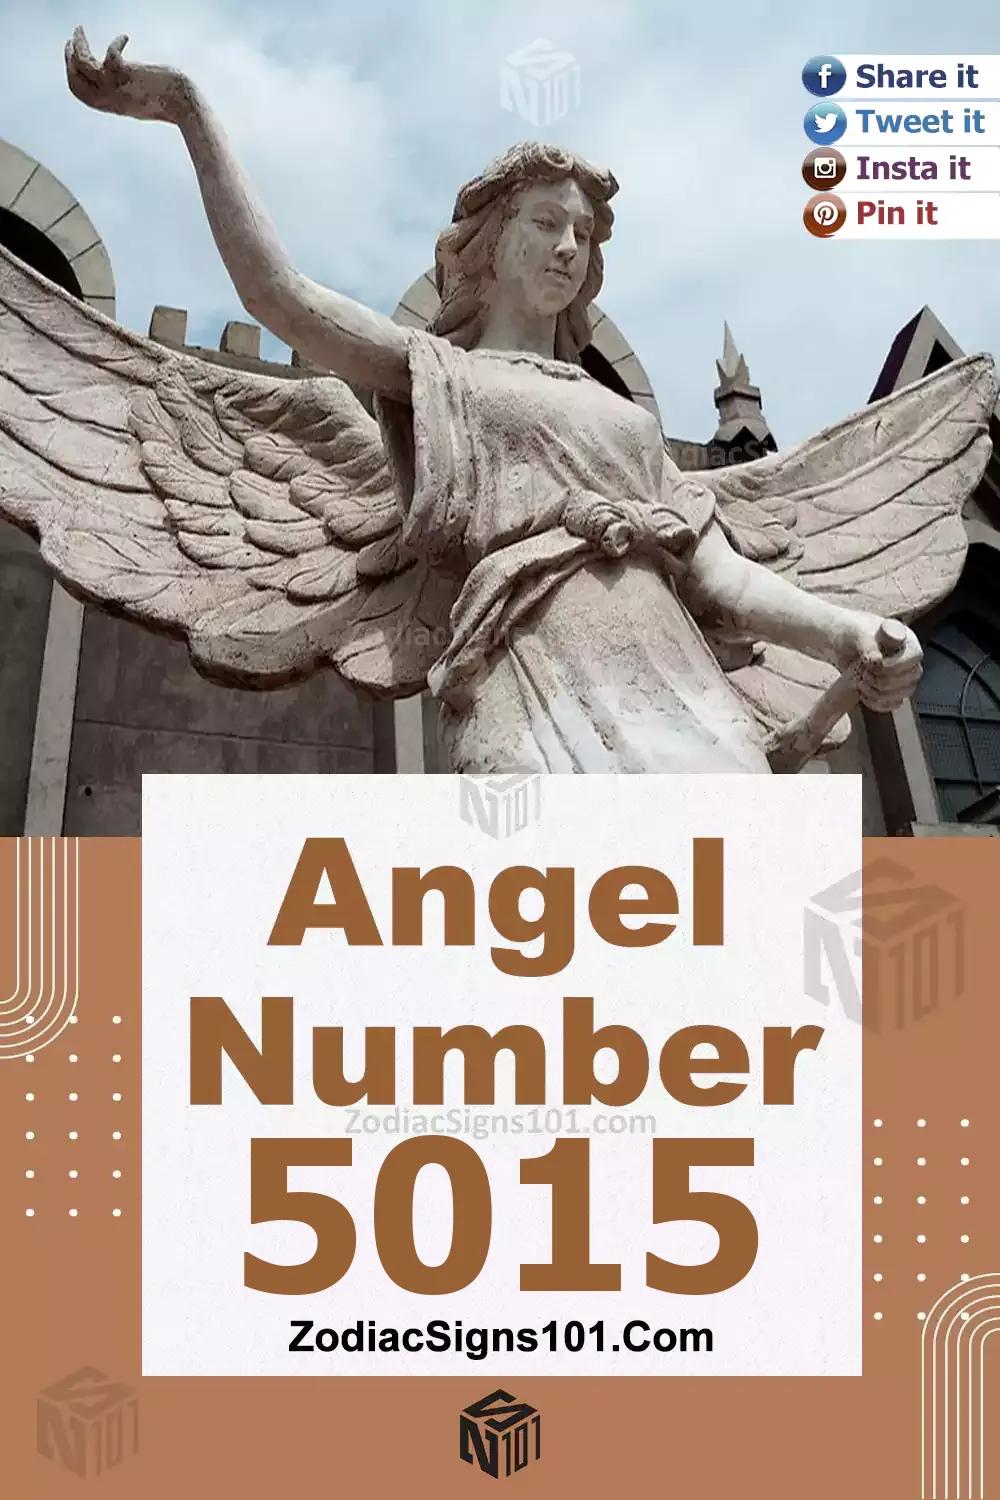 5015-Angel-Number-Meaning.jpg